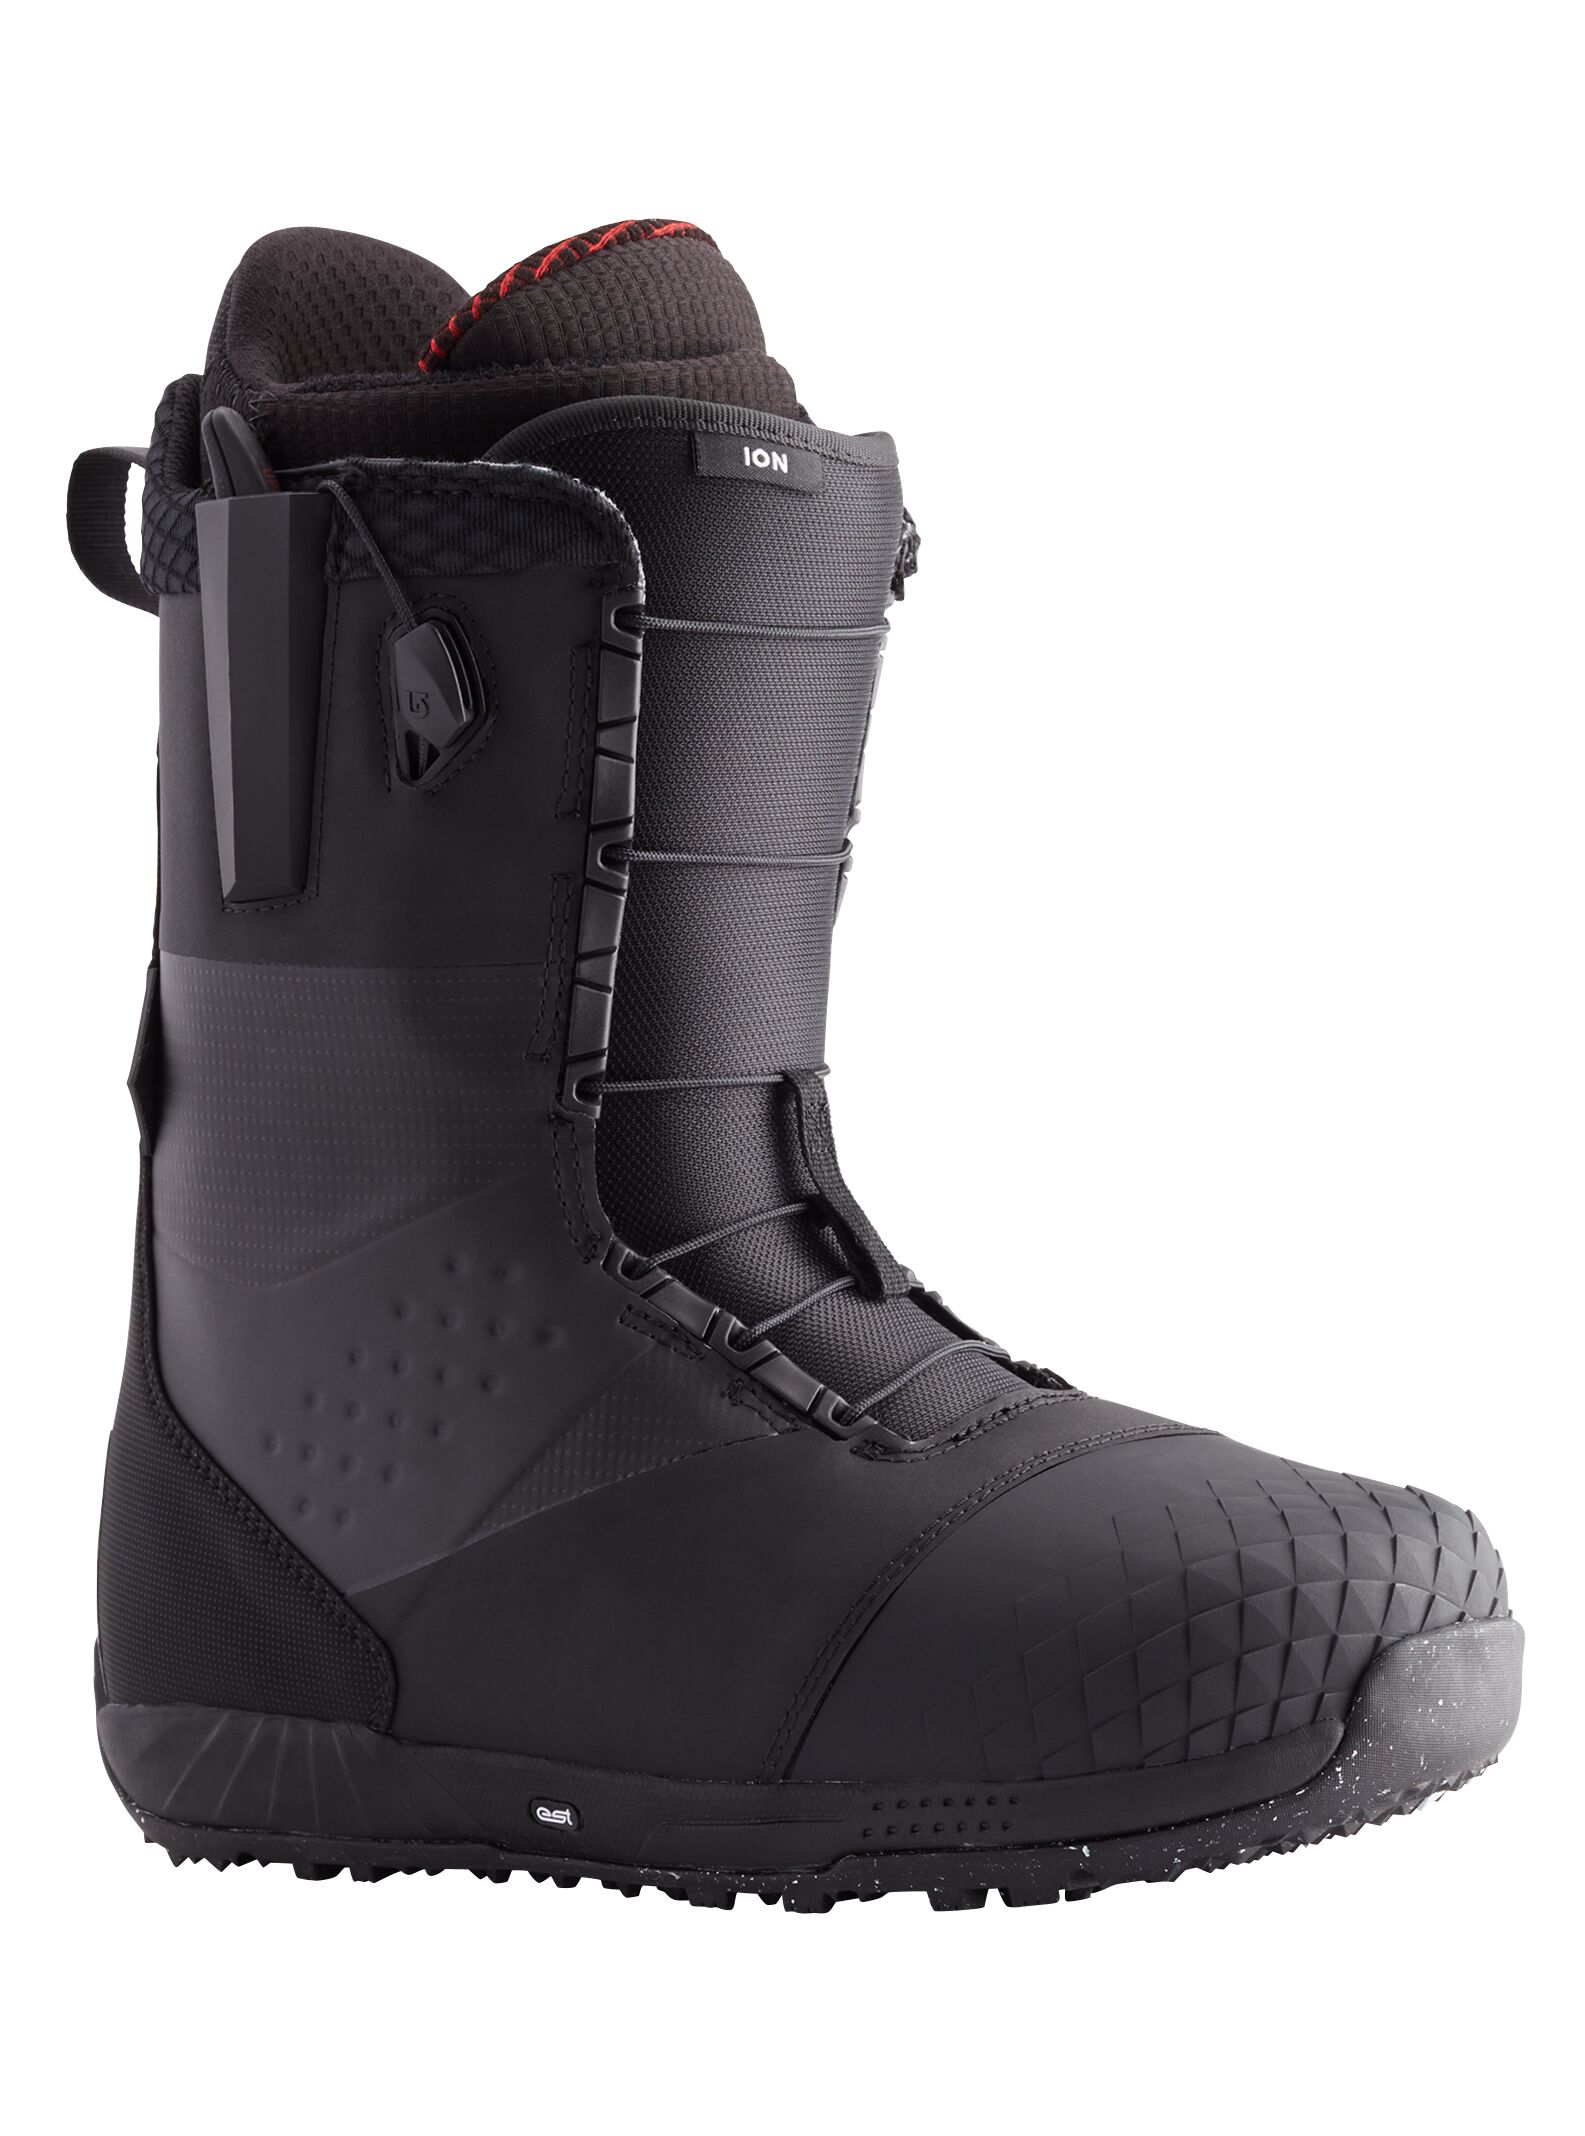 Burton Ion Snowboard Boots black